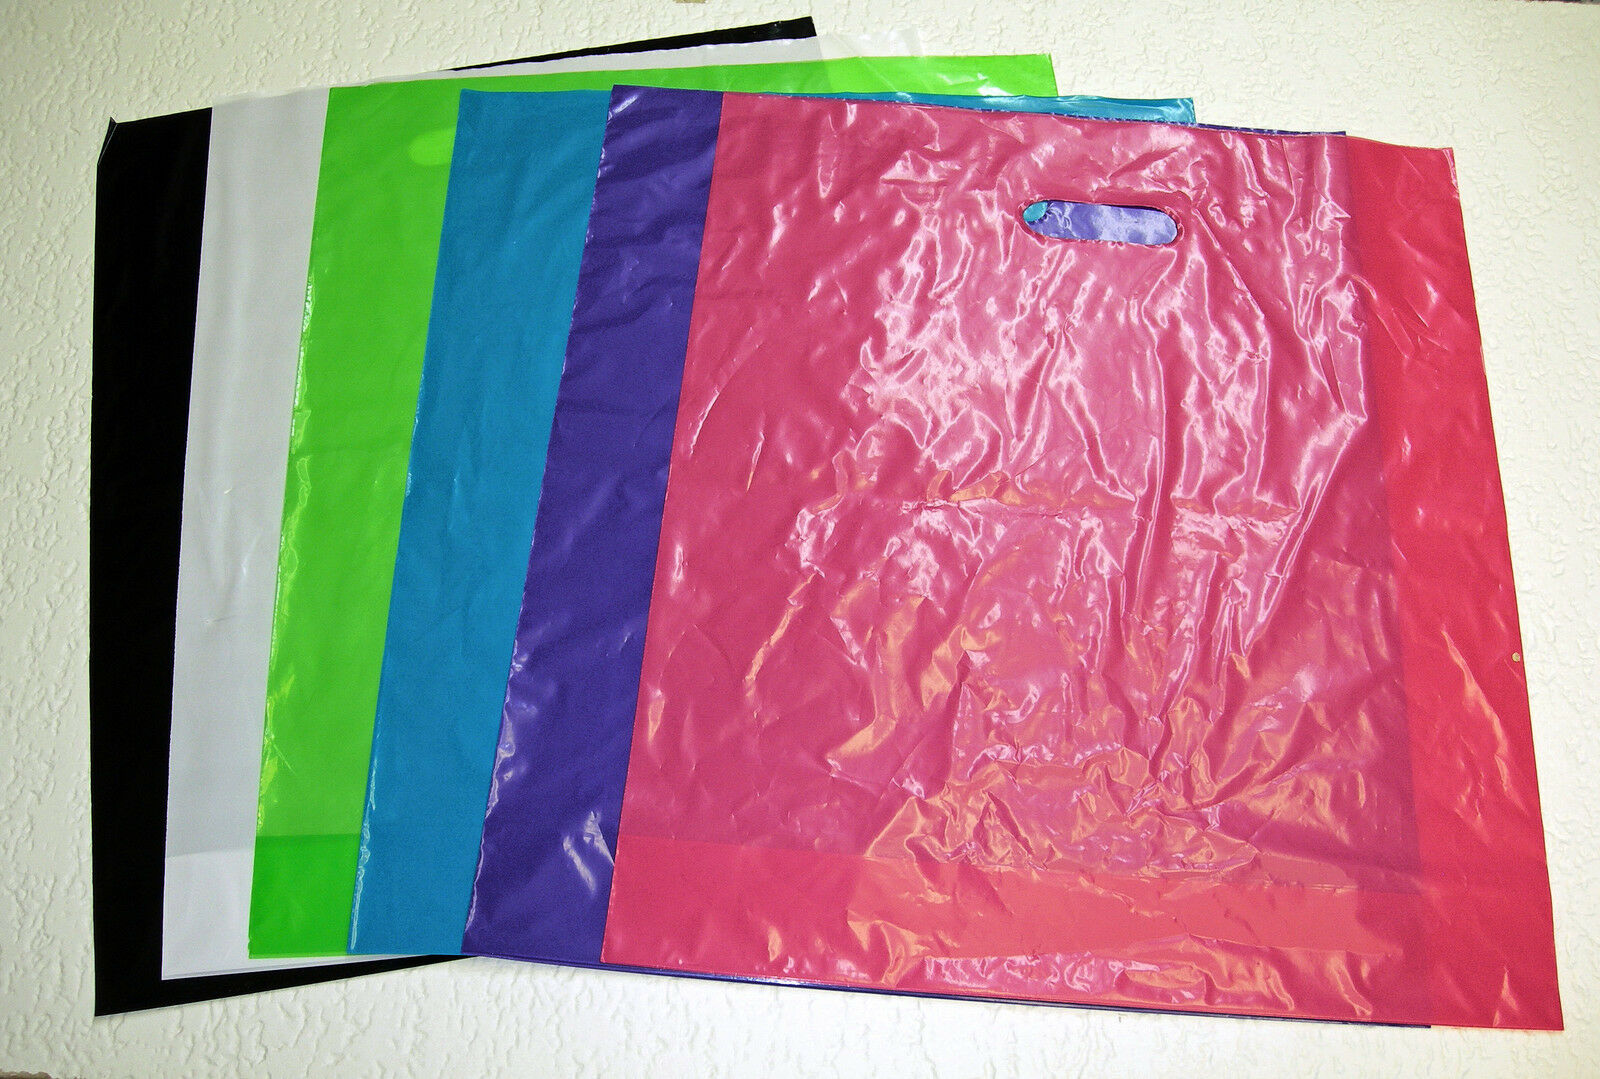 Regular Glossy Low-density Plastic Merchandise Bags U Pick Qty., Color & Size